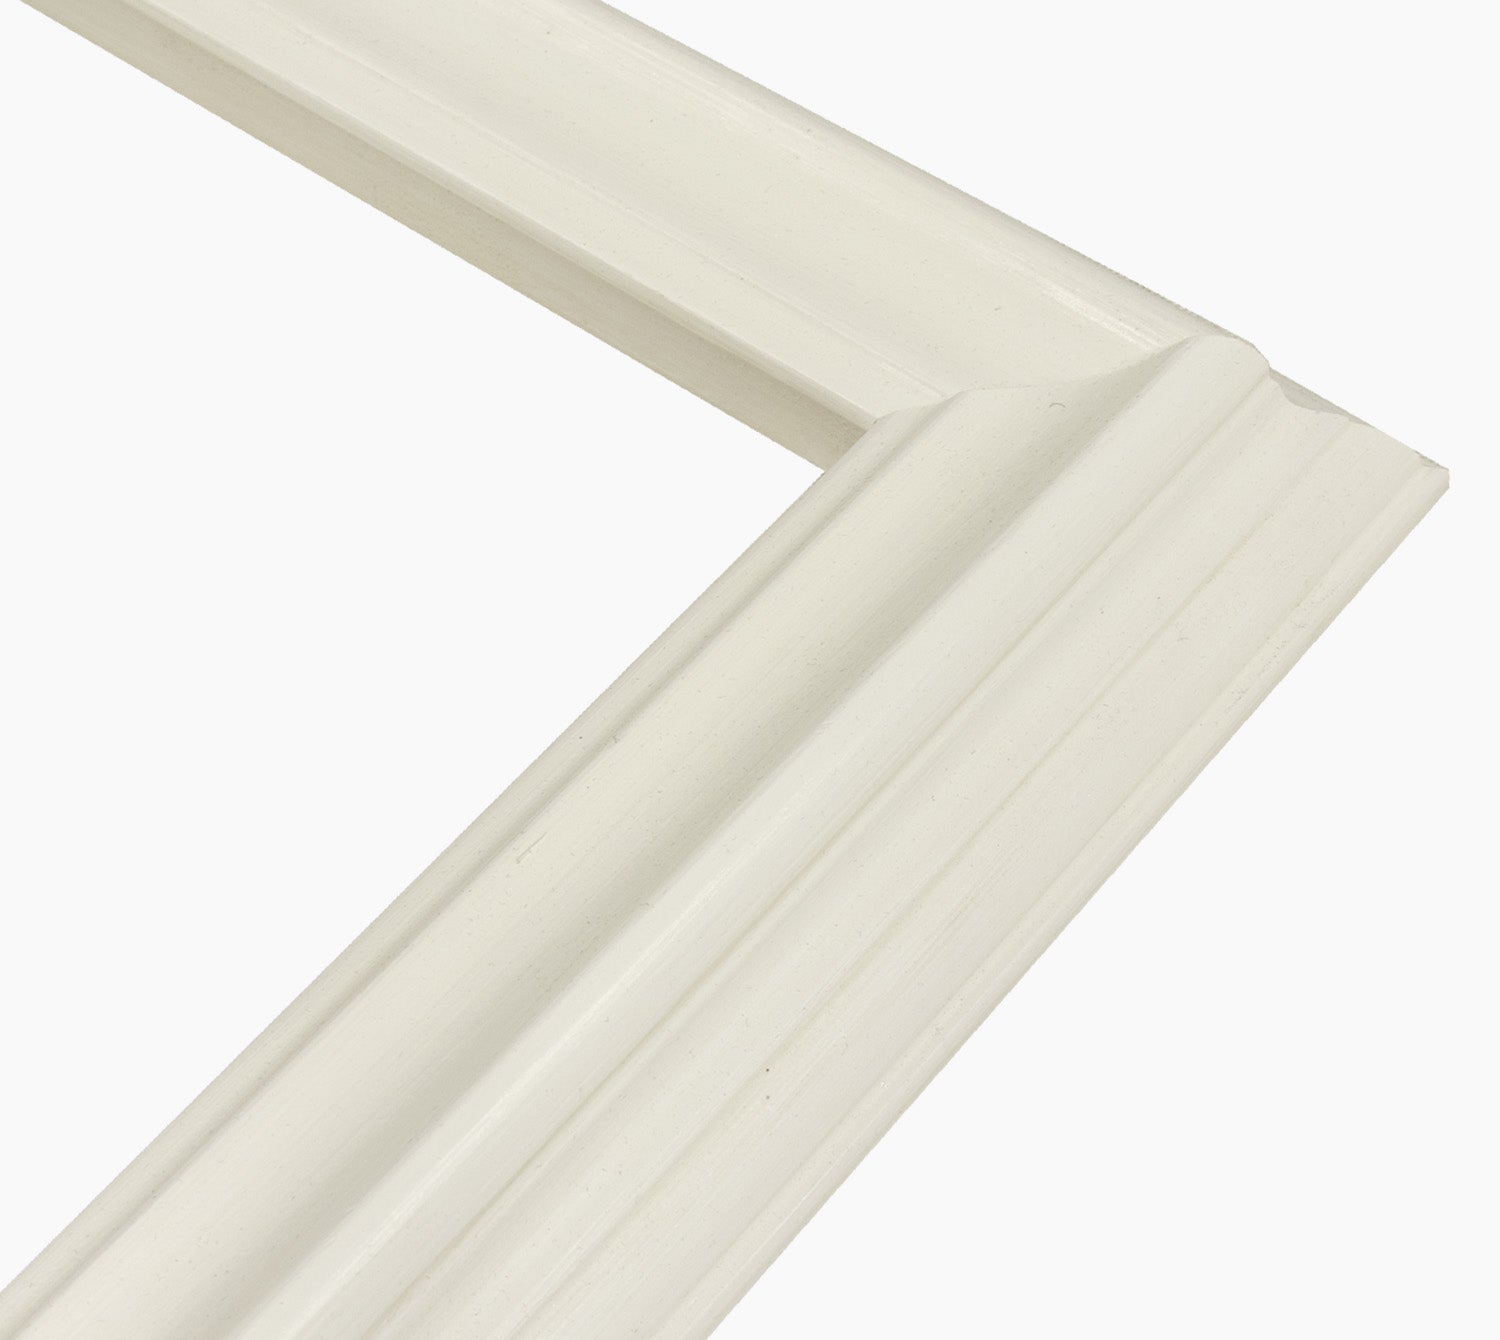 310.899 cadre en bois blanc avec de la cire mesure de profil 60x40 mm Lombarda cornici S.n.c.